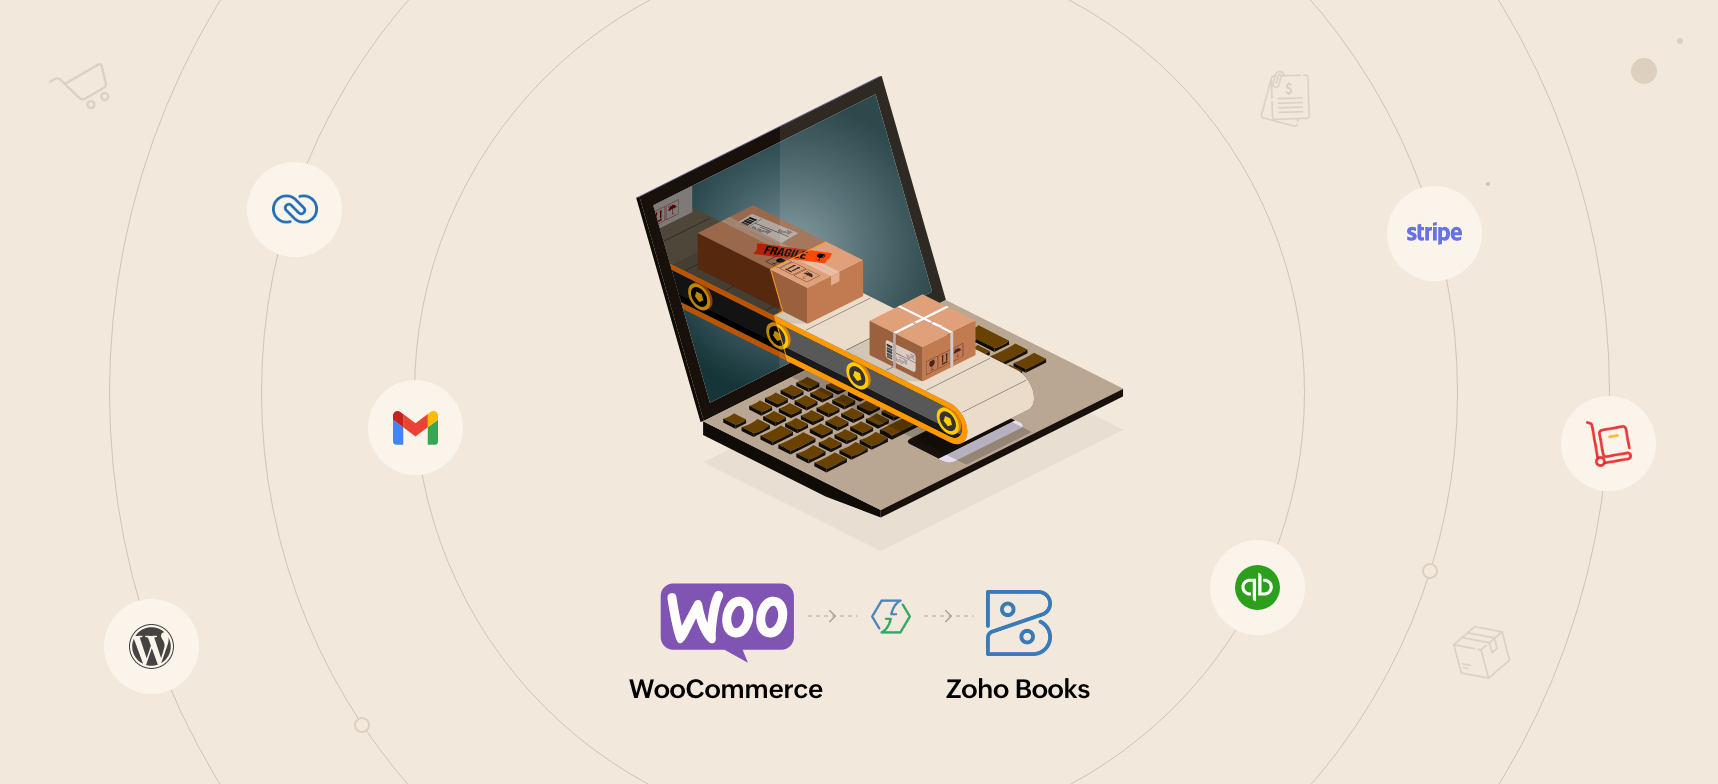 WooCommerce and Zoho Books integration using Zoho Flow